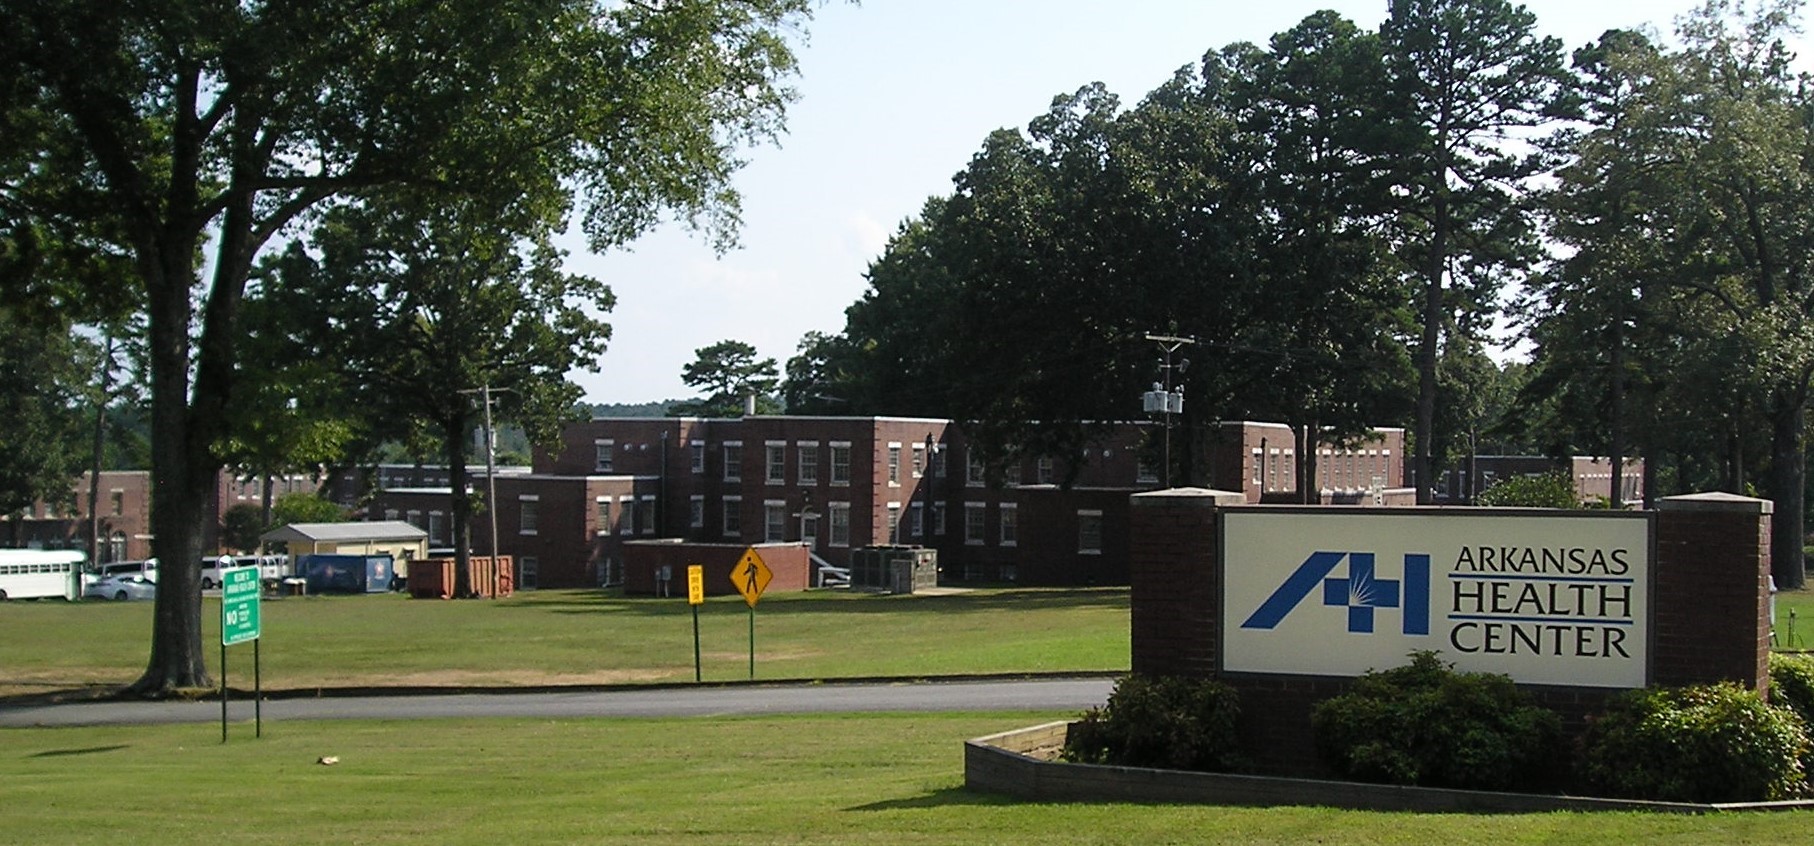 The Arkansas Health Center